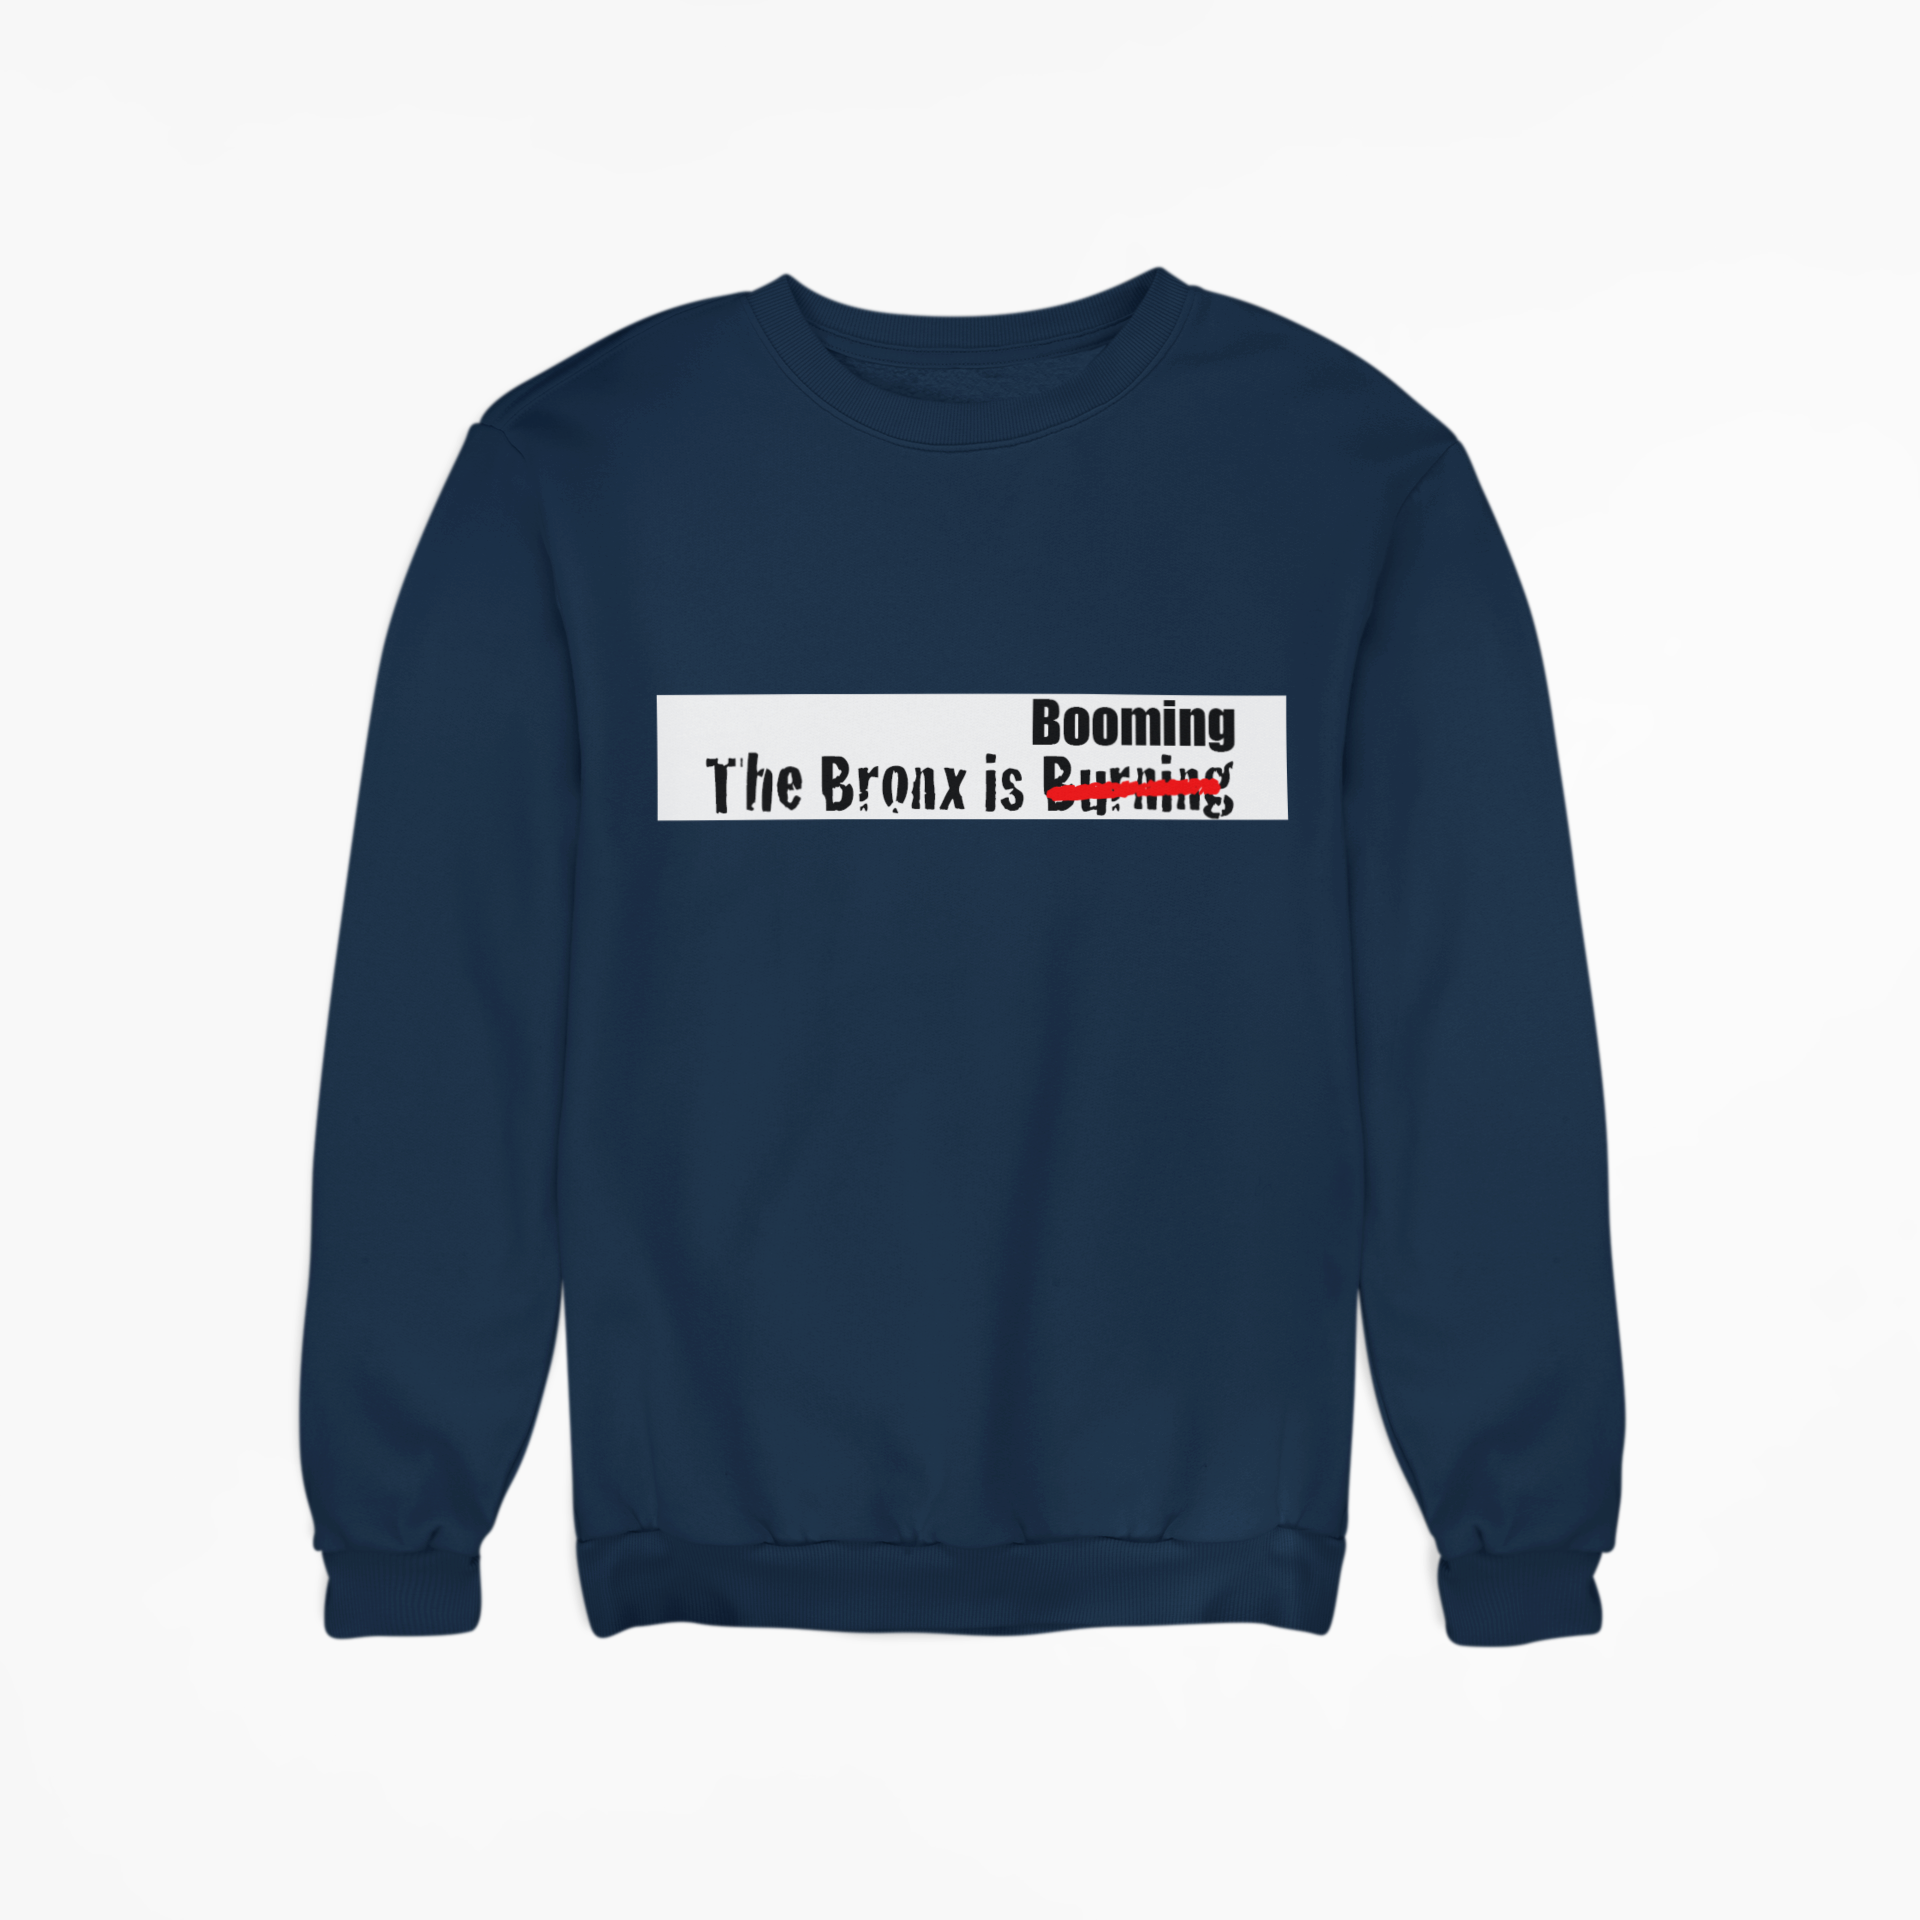 The Bronx is Booming Sweatshirt